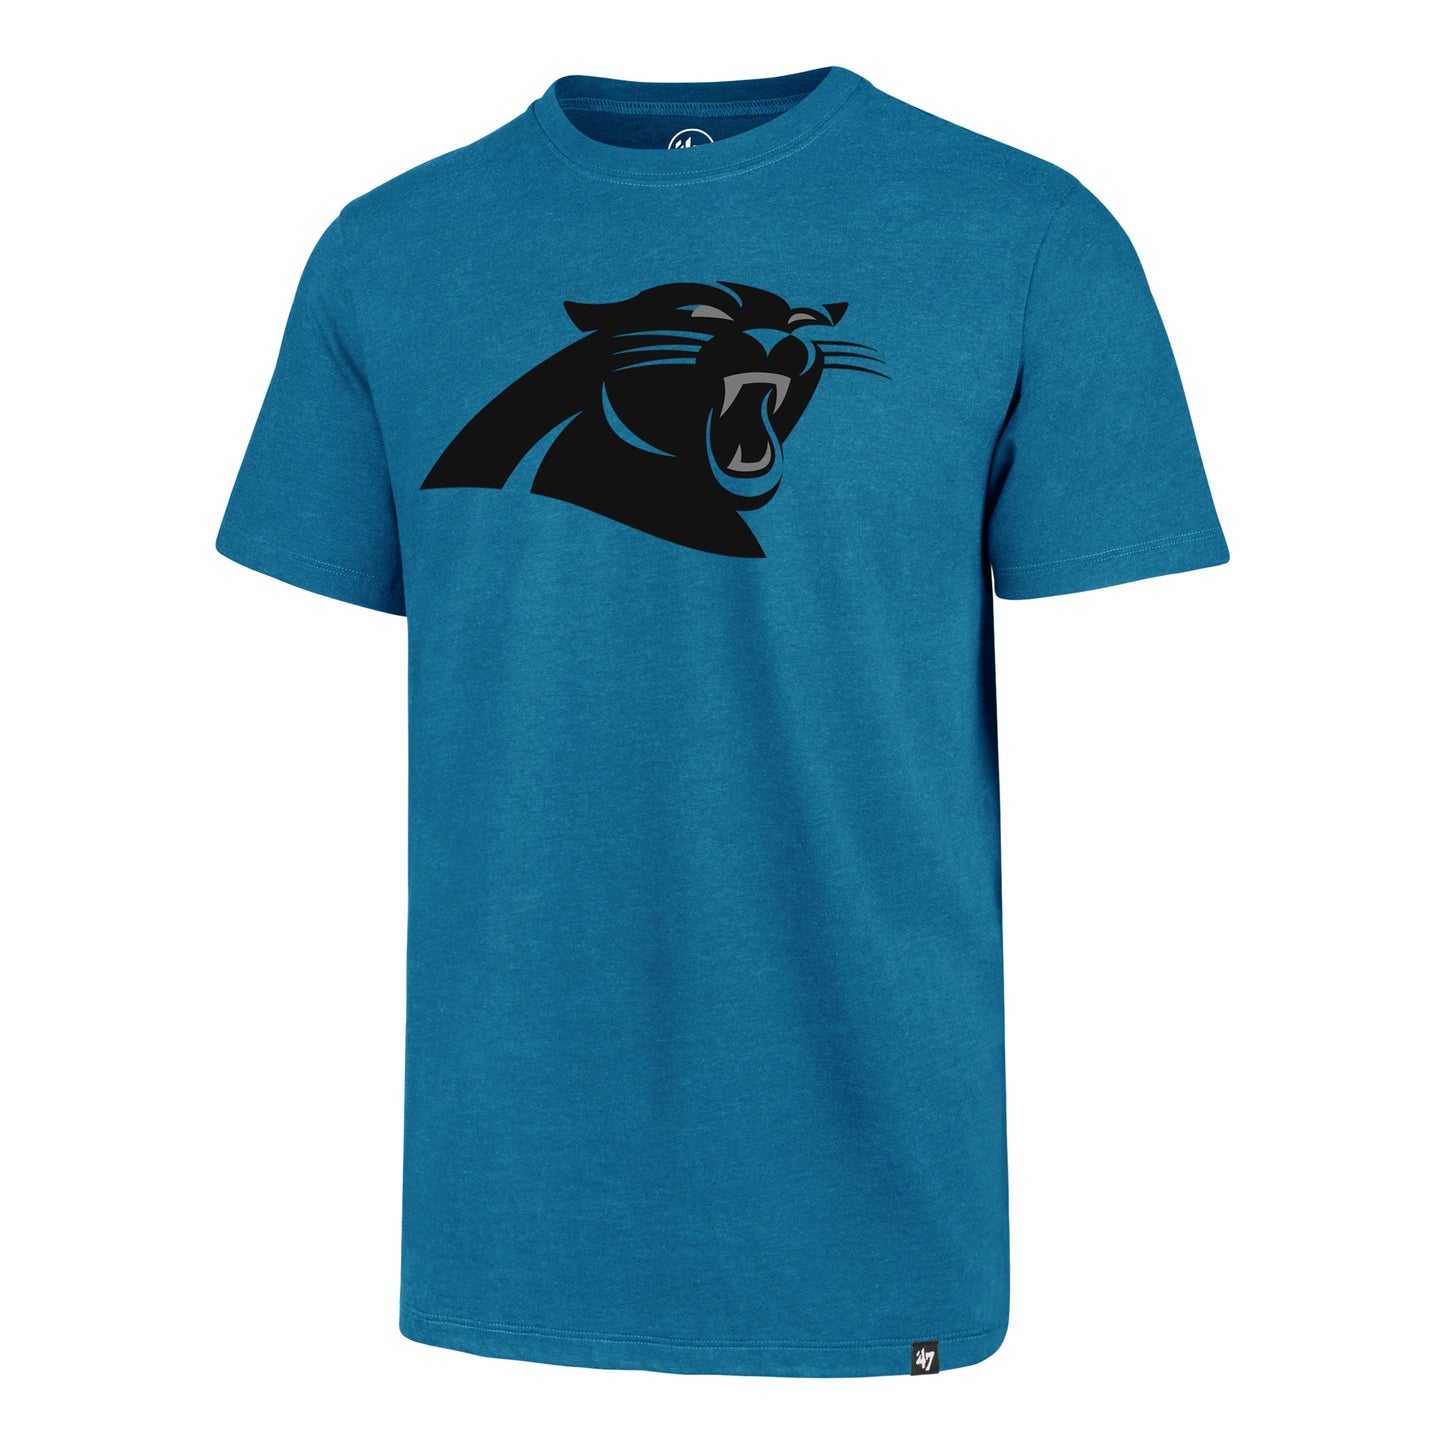 Men's Carolina Panthers NFL Imprint Club Tee By ’47 Brand